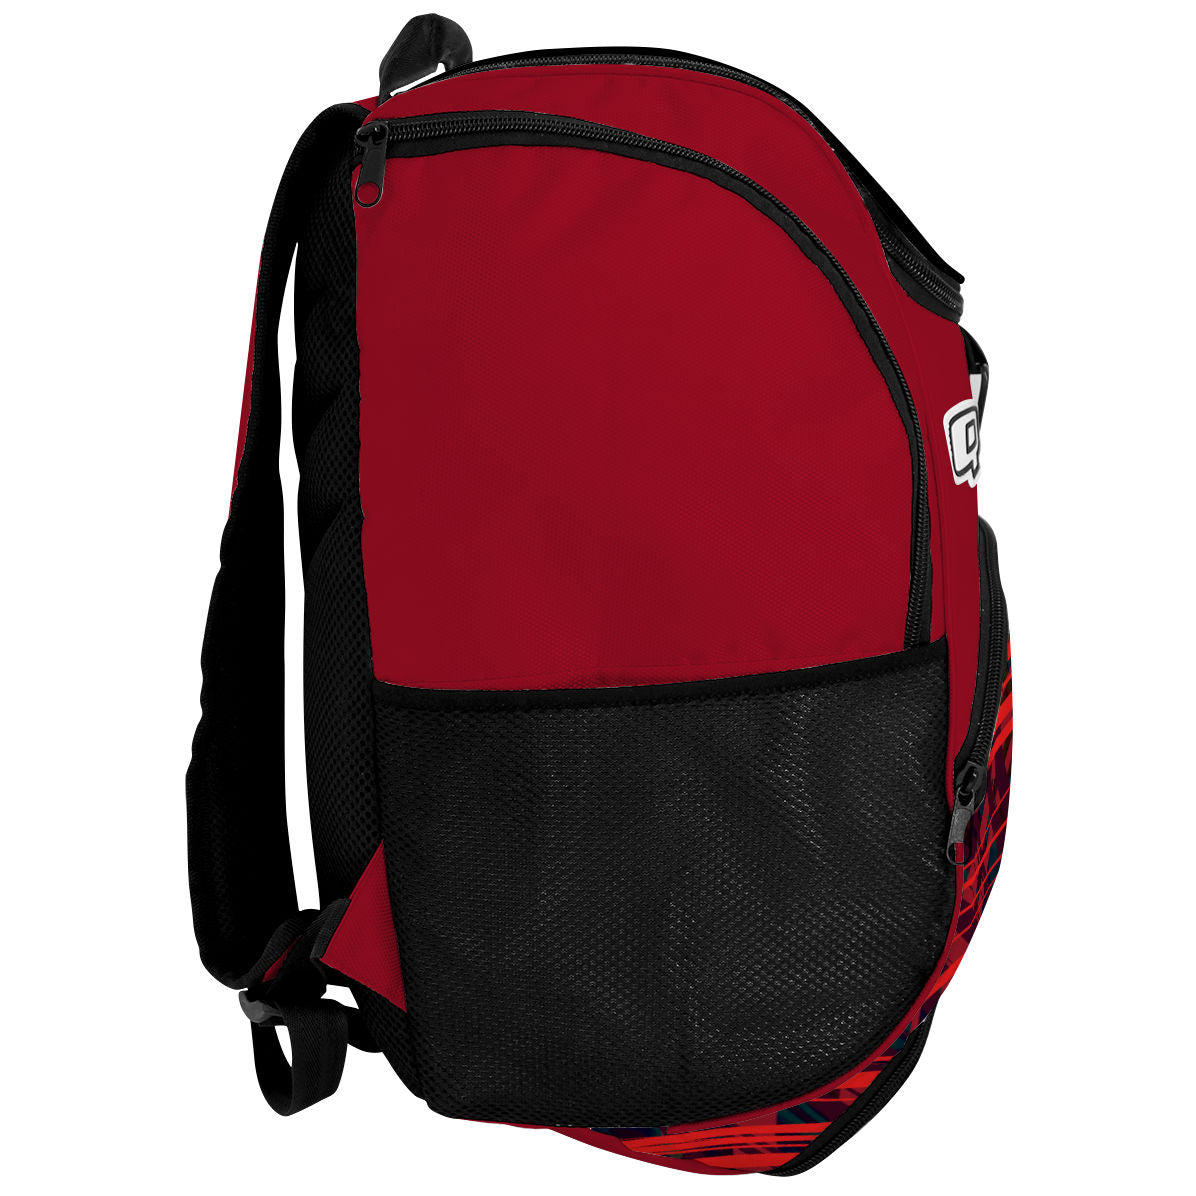 Mass U - Backpack